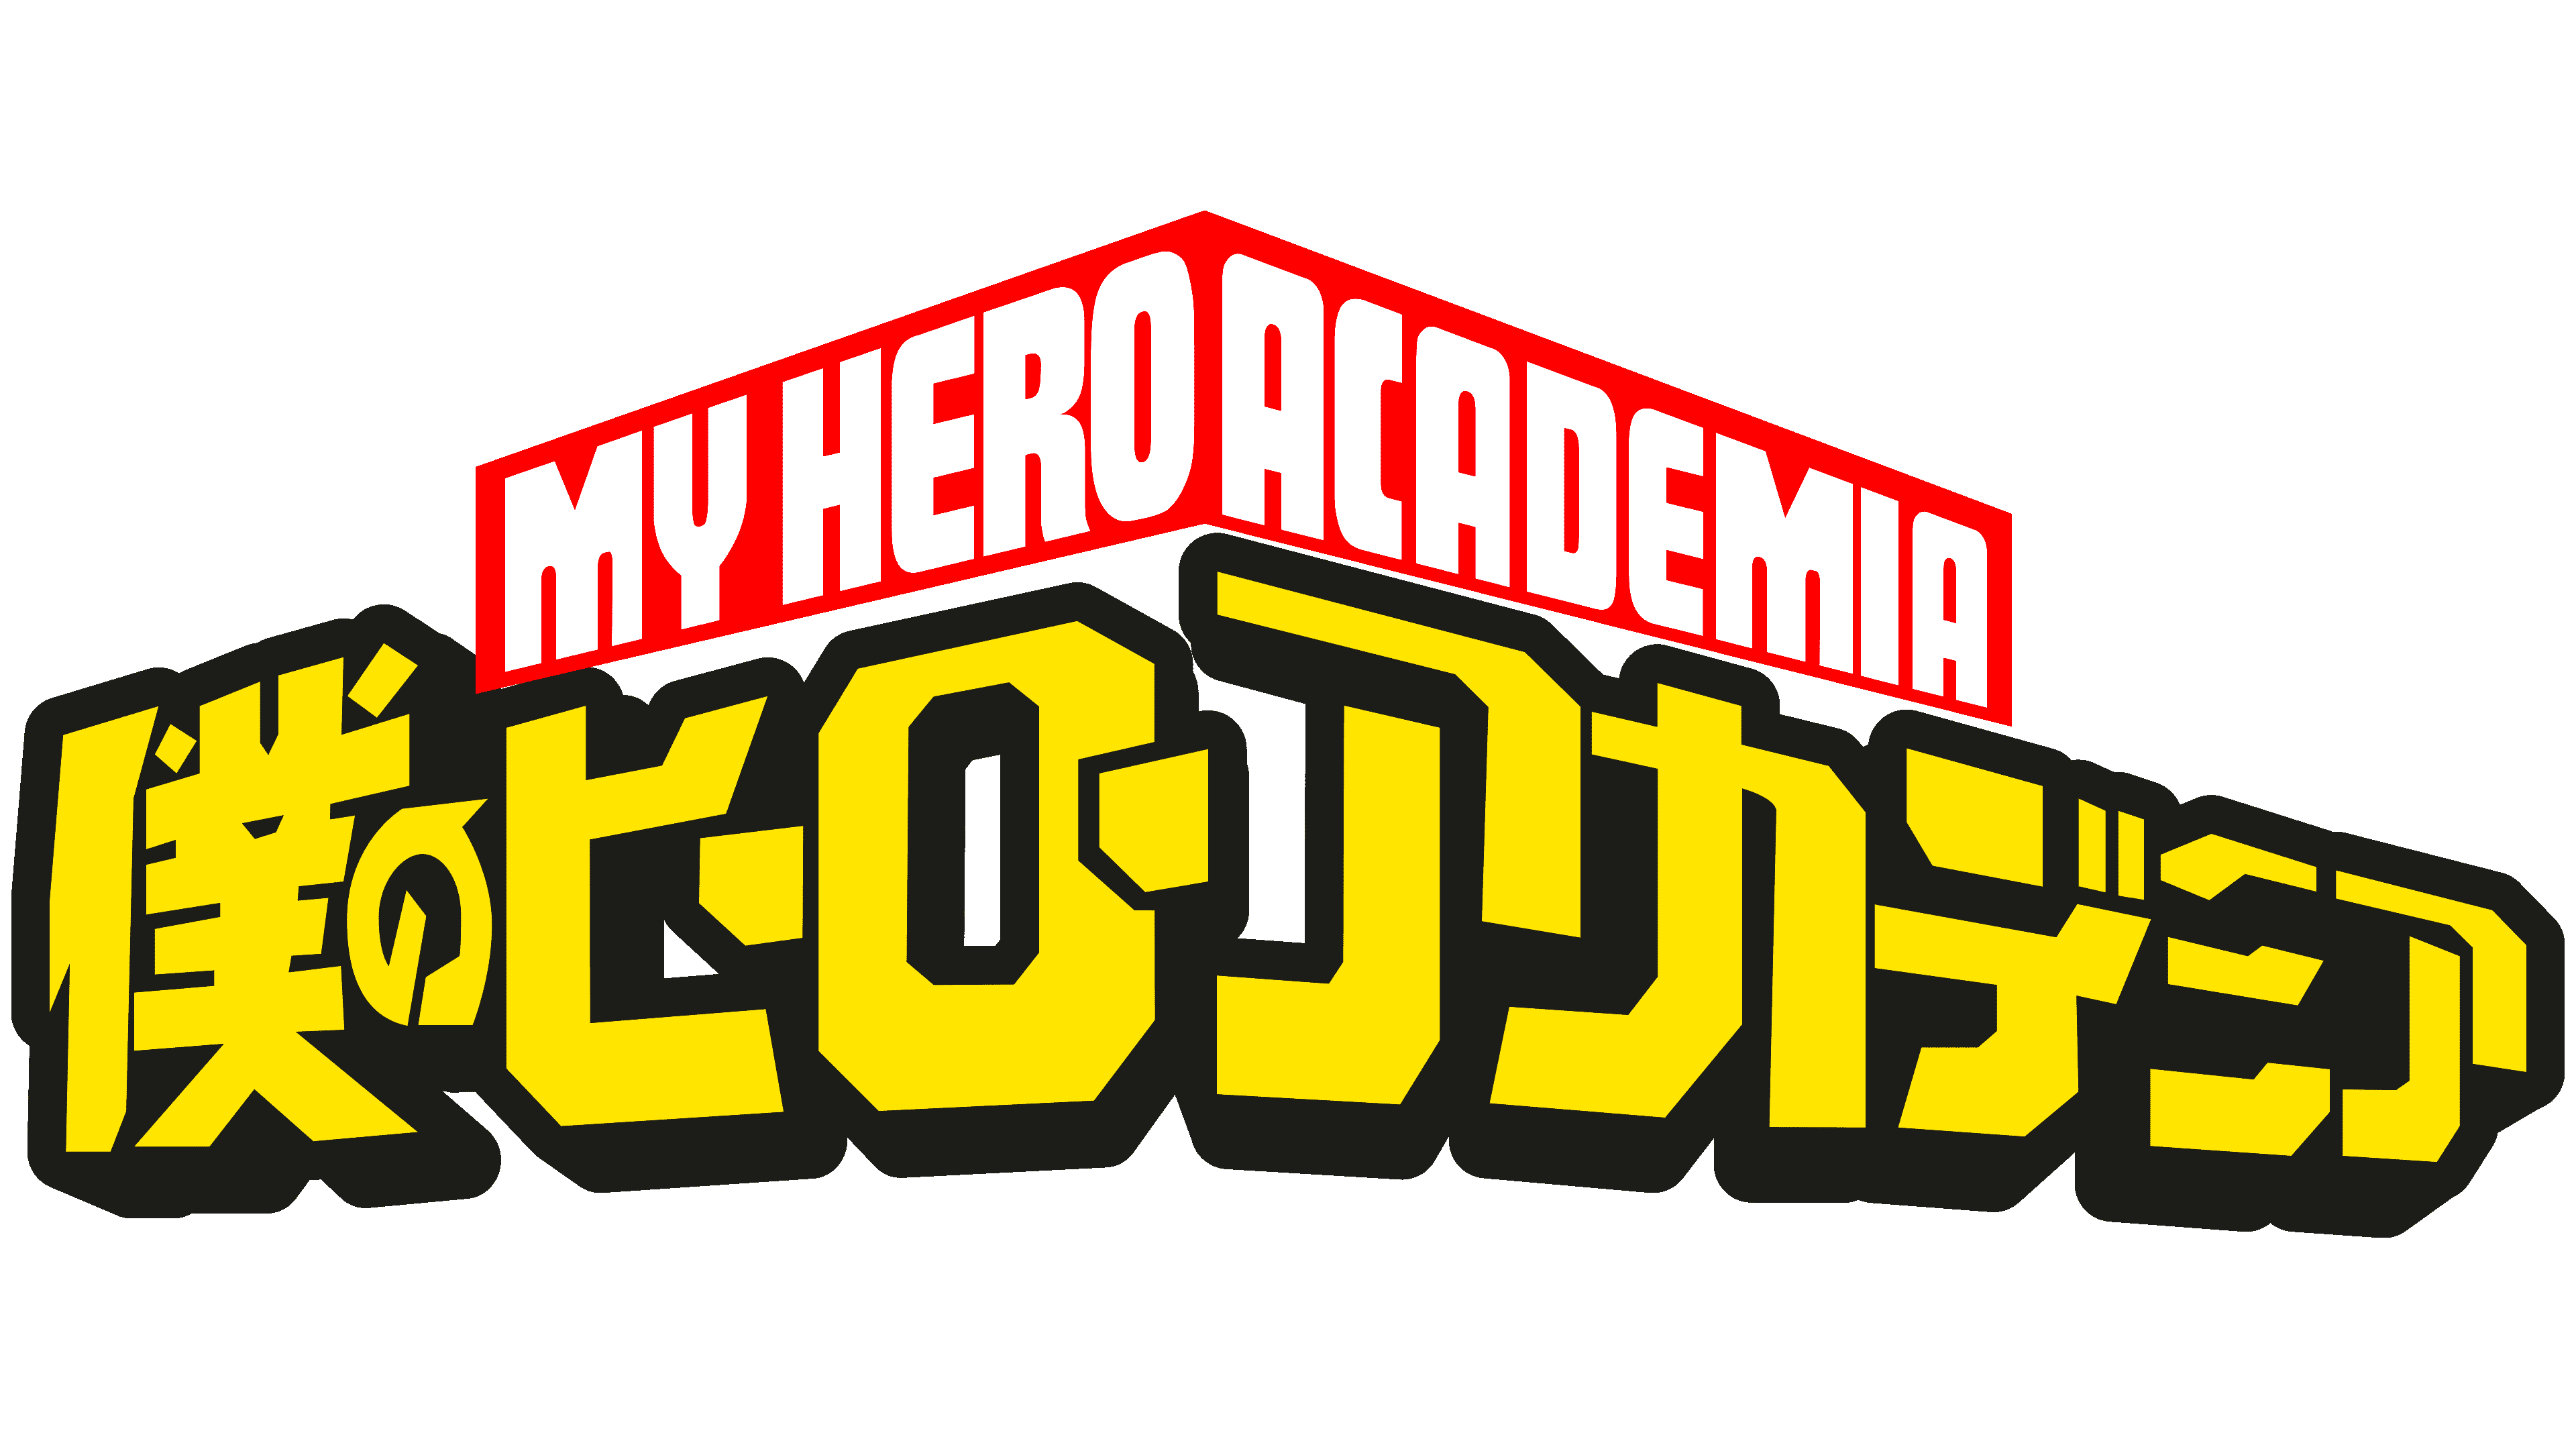 Hero motorcycle logo history and Meaning, bike emblem